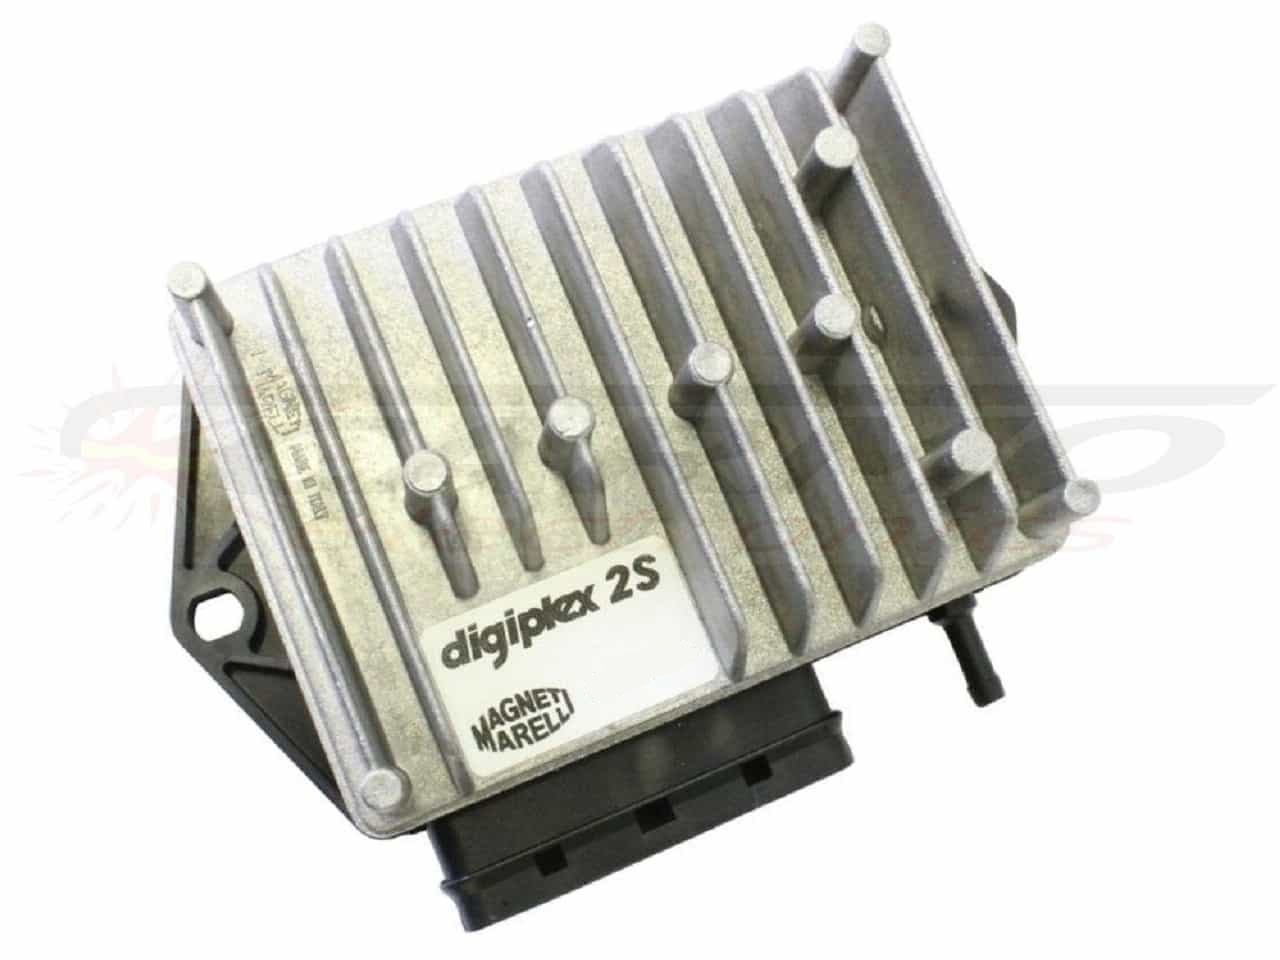 Digiplex 2S TCI CDI dispositif de commande boîte noire